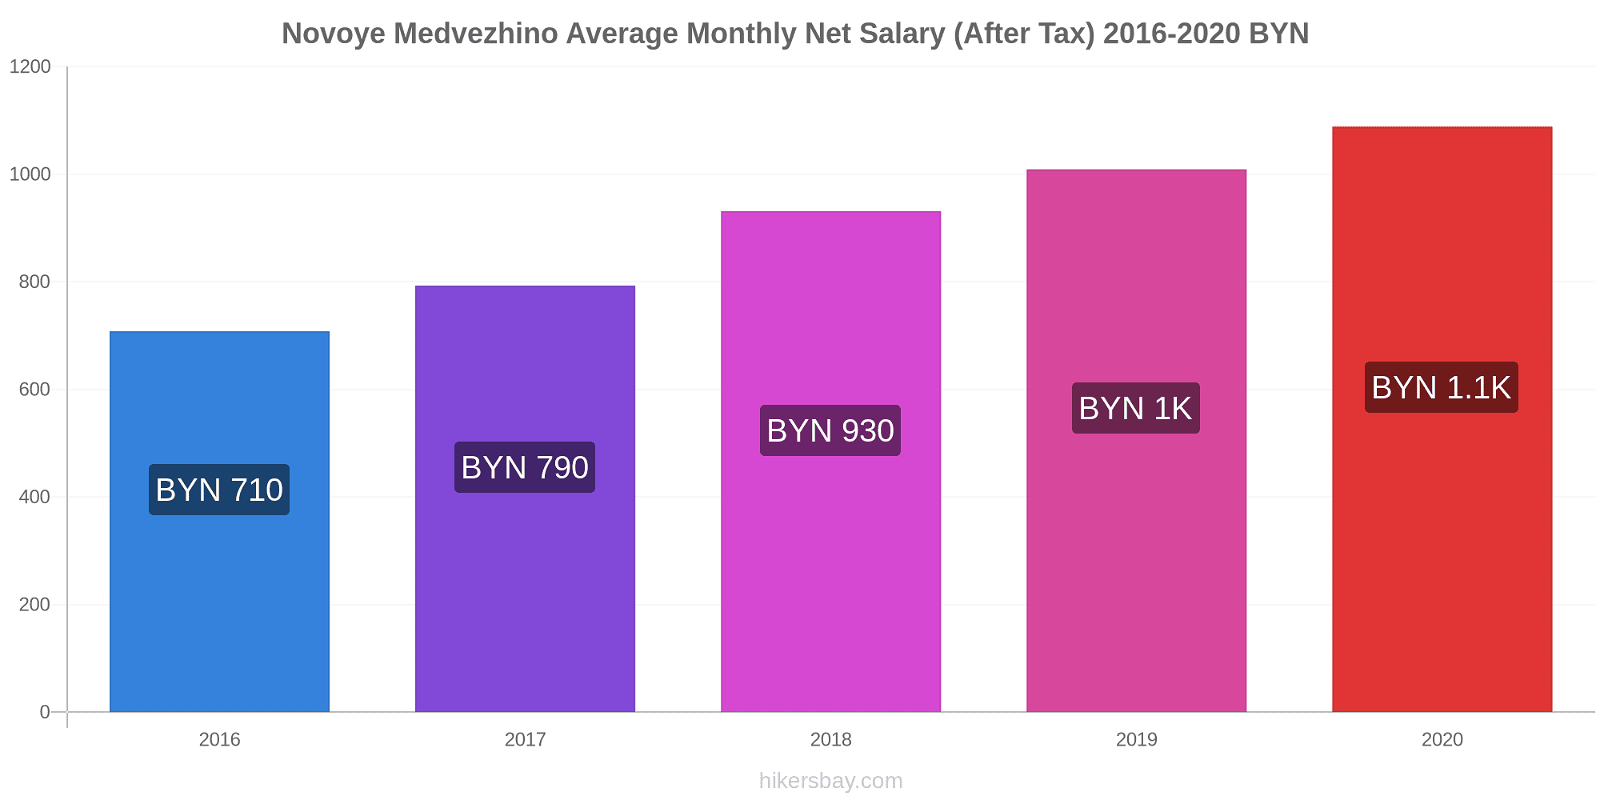 Novoye Medvezhino price changes Average Monthly Net Salary (After Tax) hikersbay.com